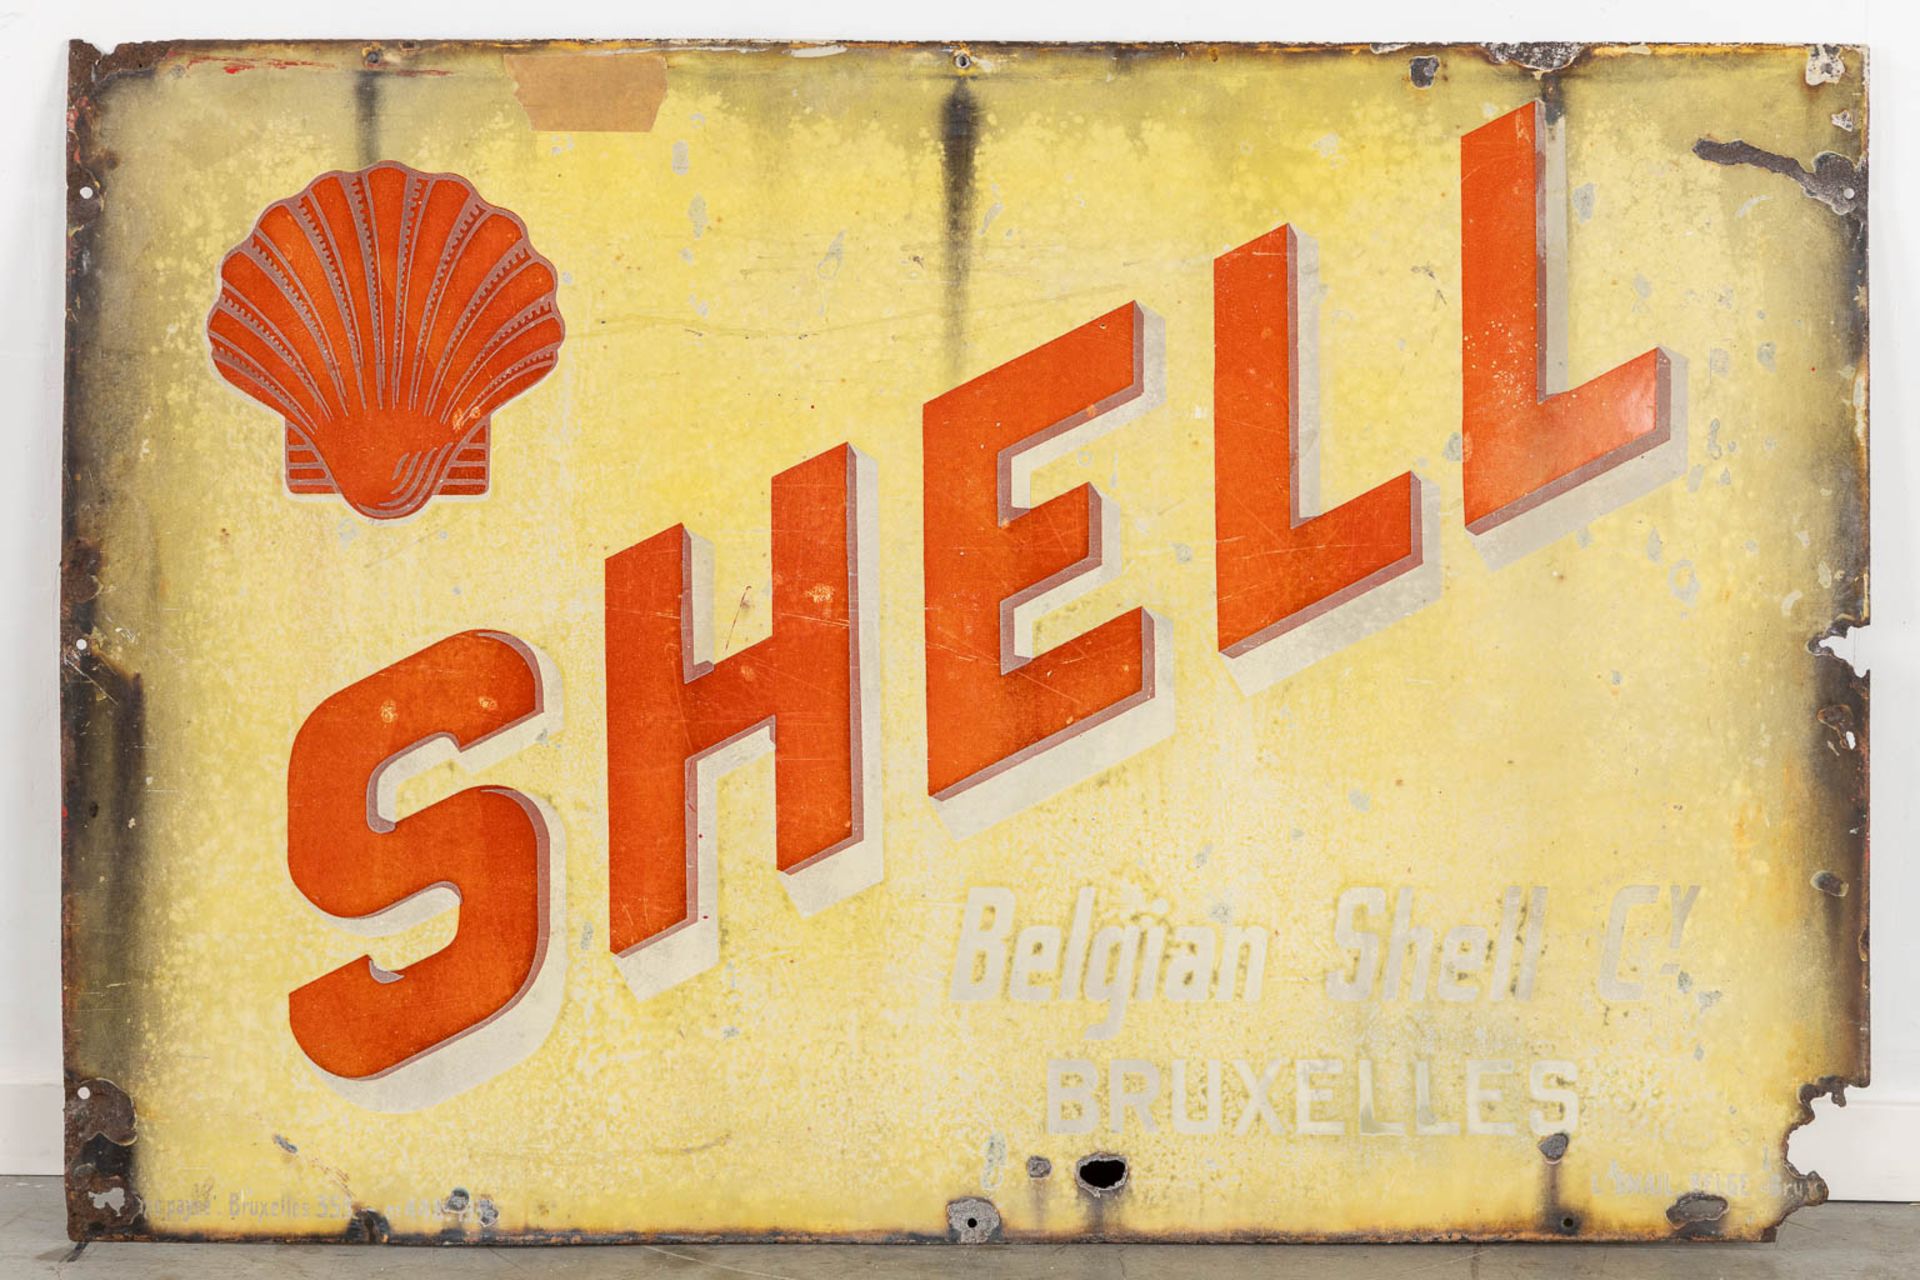 Shell Belgian Shell Company, Bruxelles, an enamel plate. (W:120 x H:80 cm) - Image 3 of 9